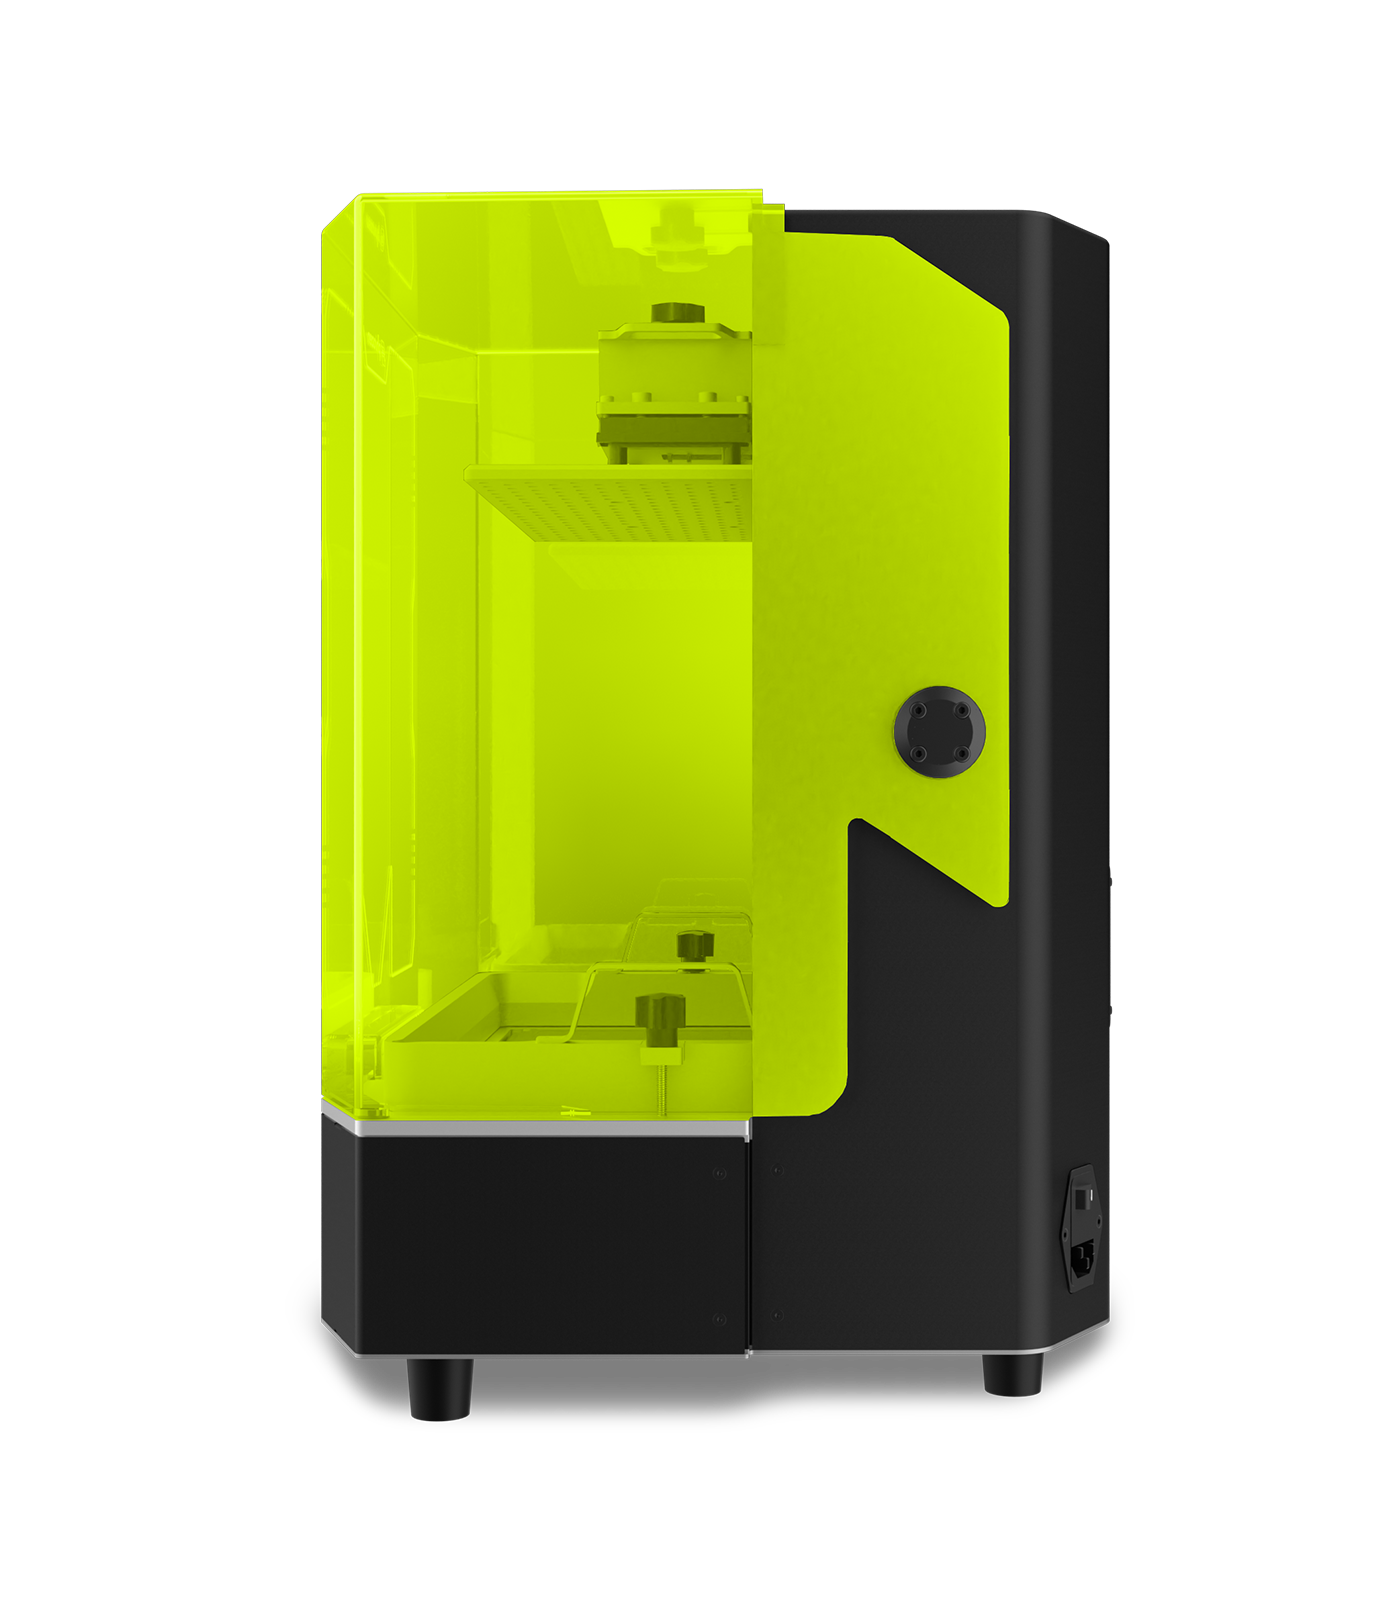 Phrozen Sonic MEGA 8K S Resin 3D Printer (Pre-Order)